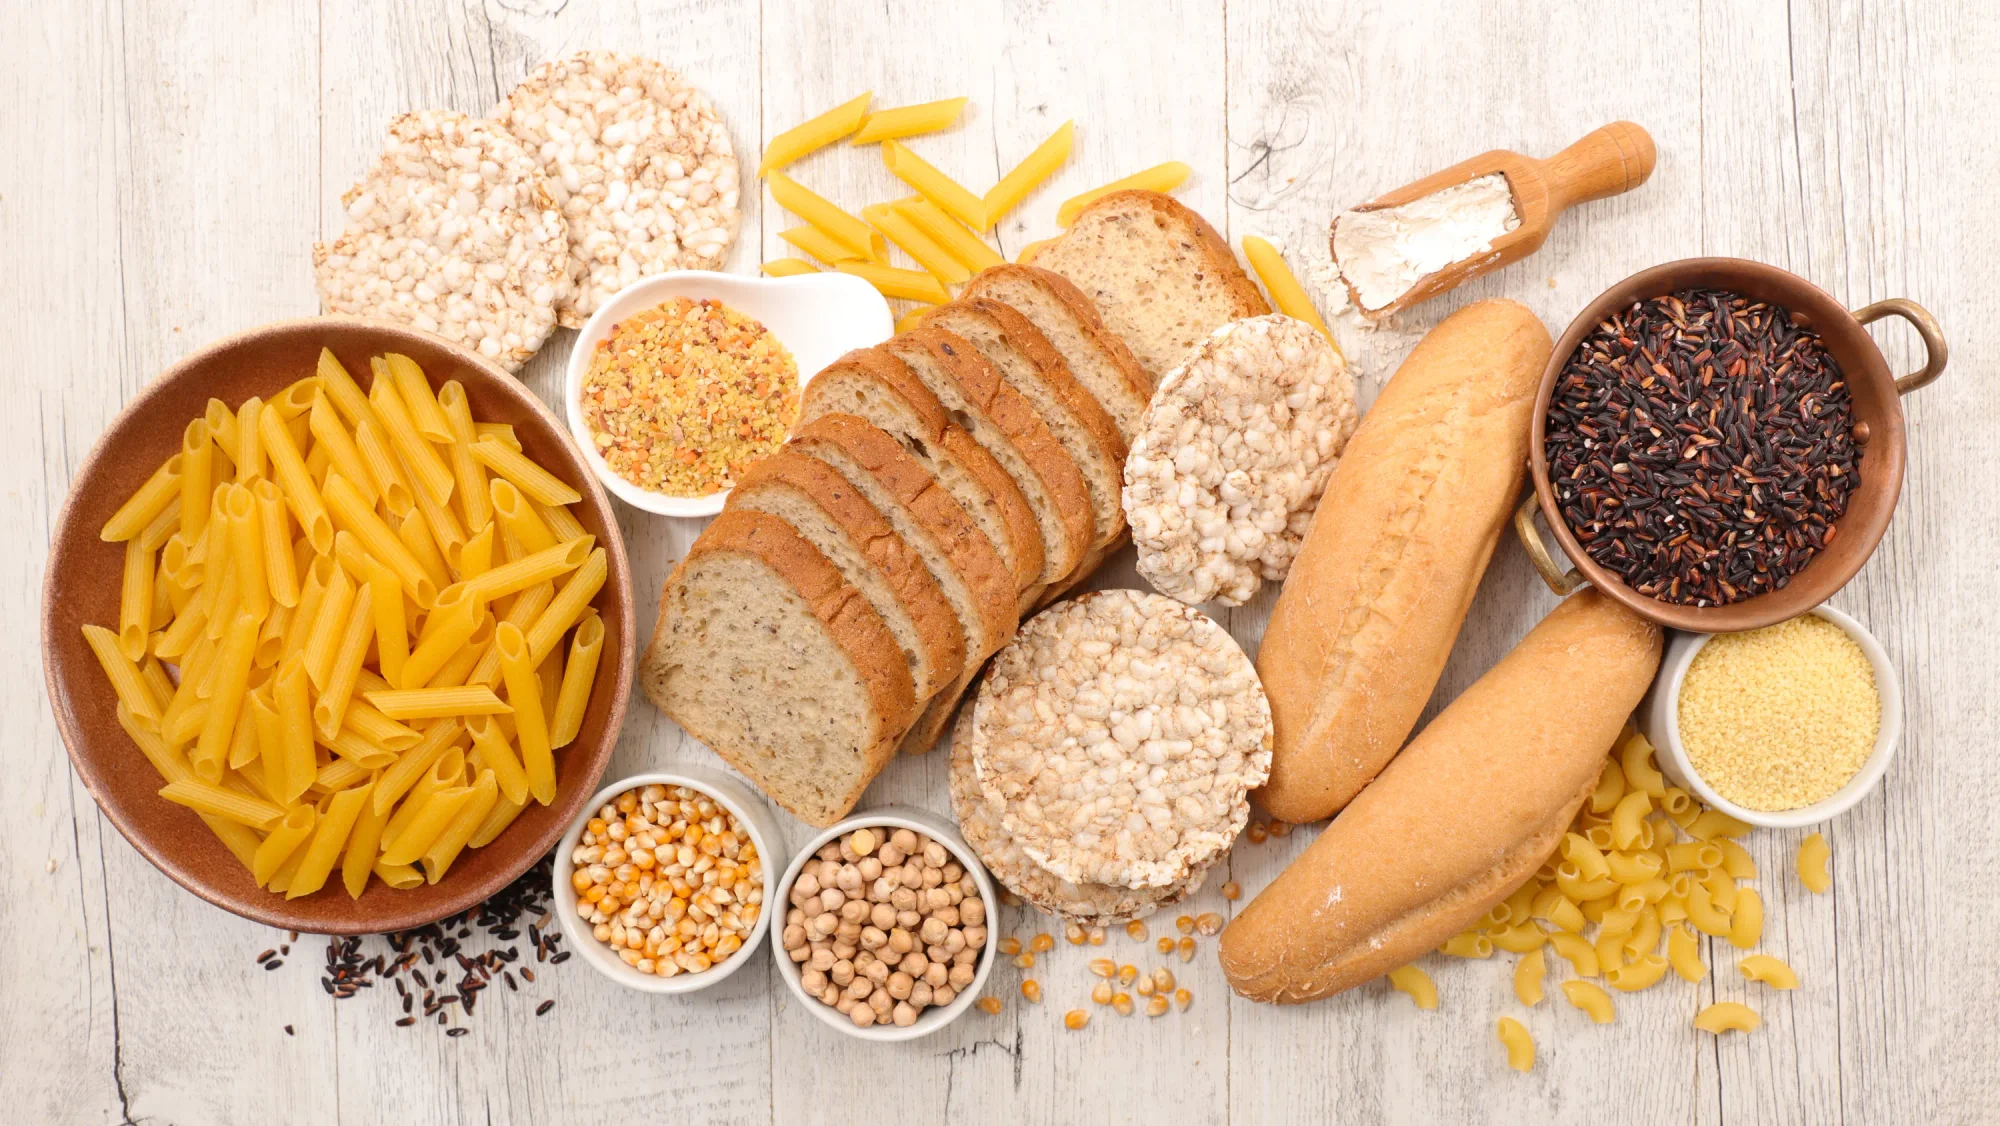 Variety of foods with gluten: Bread, pasta, flour.